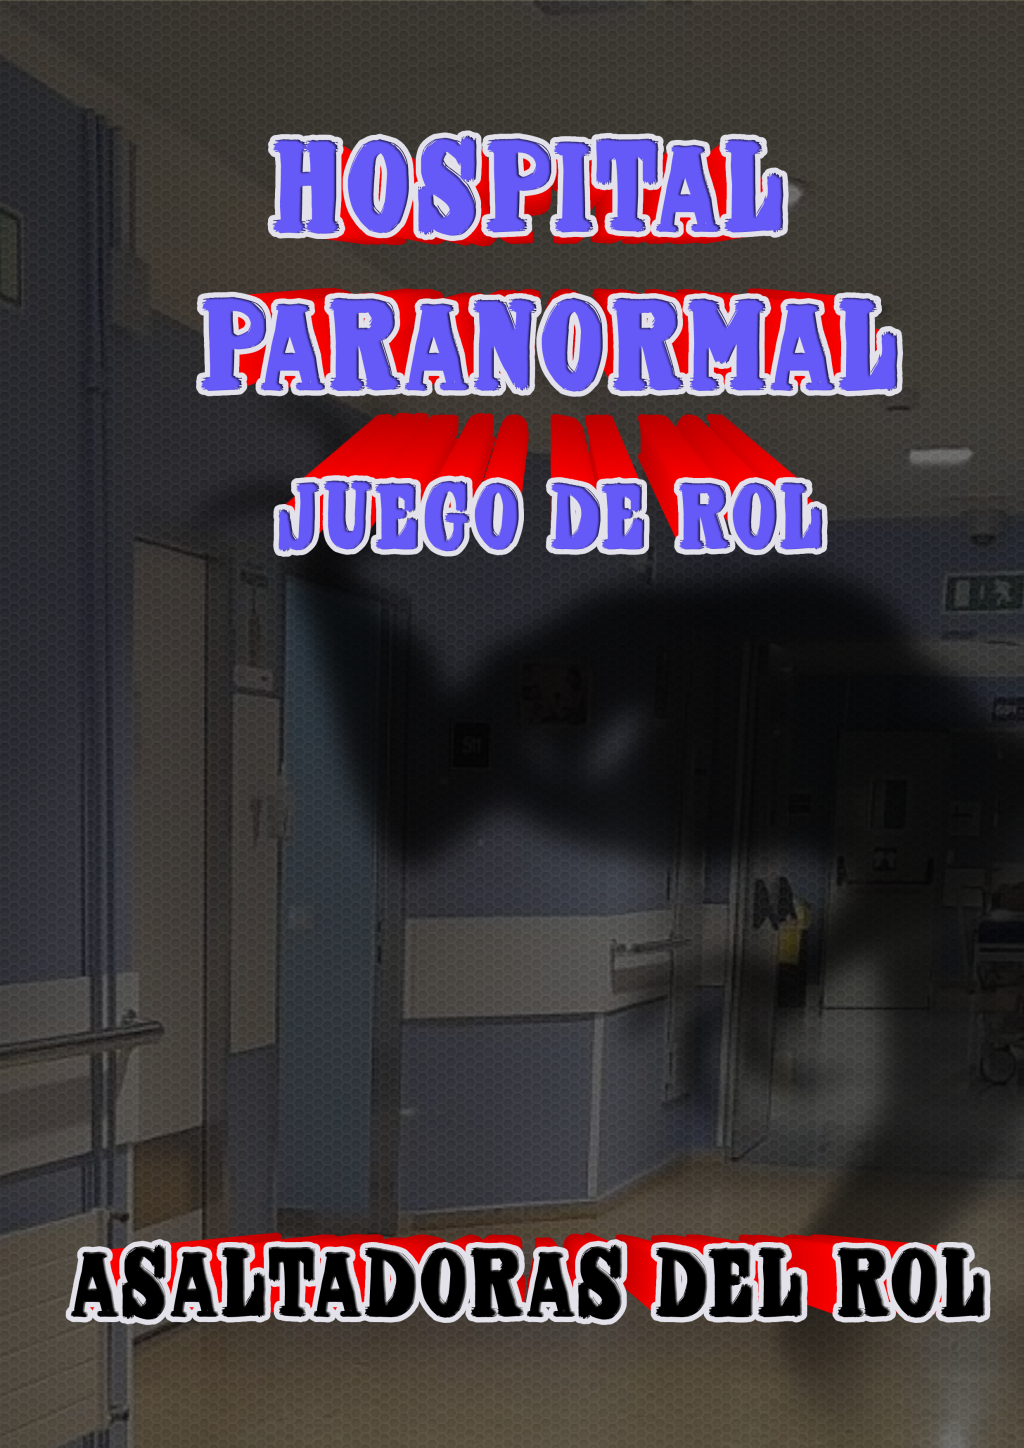 Hospital Paranormal